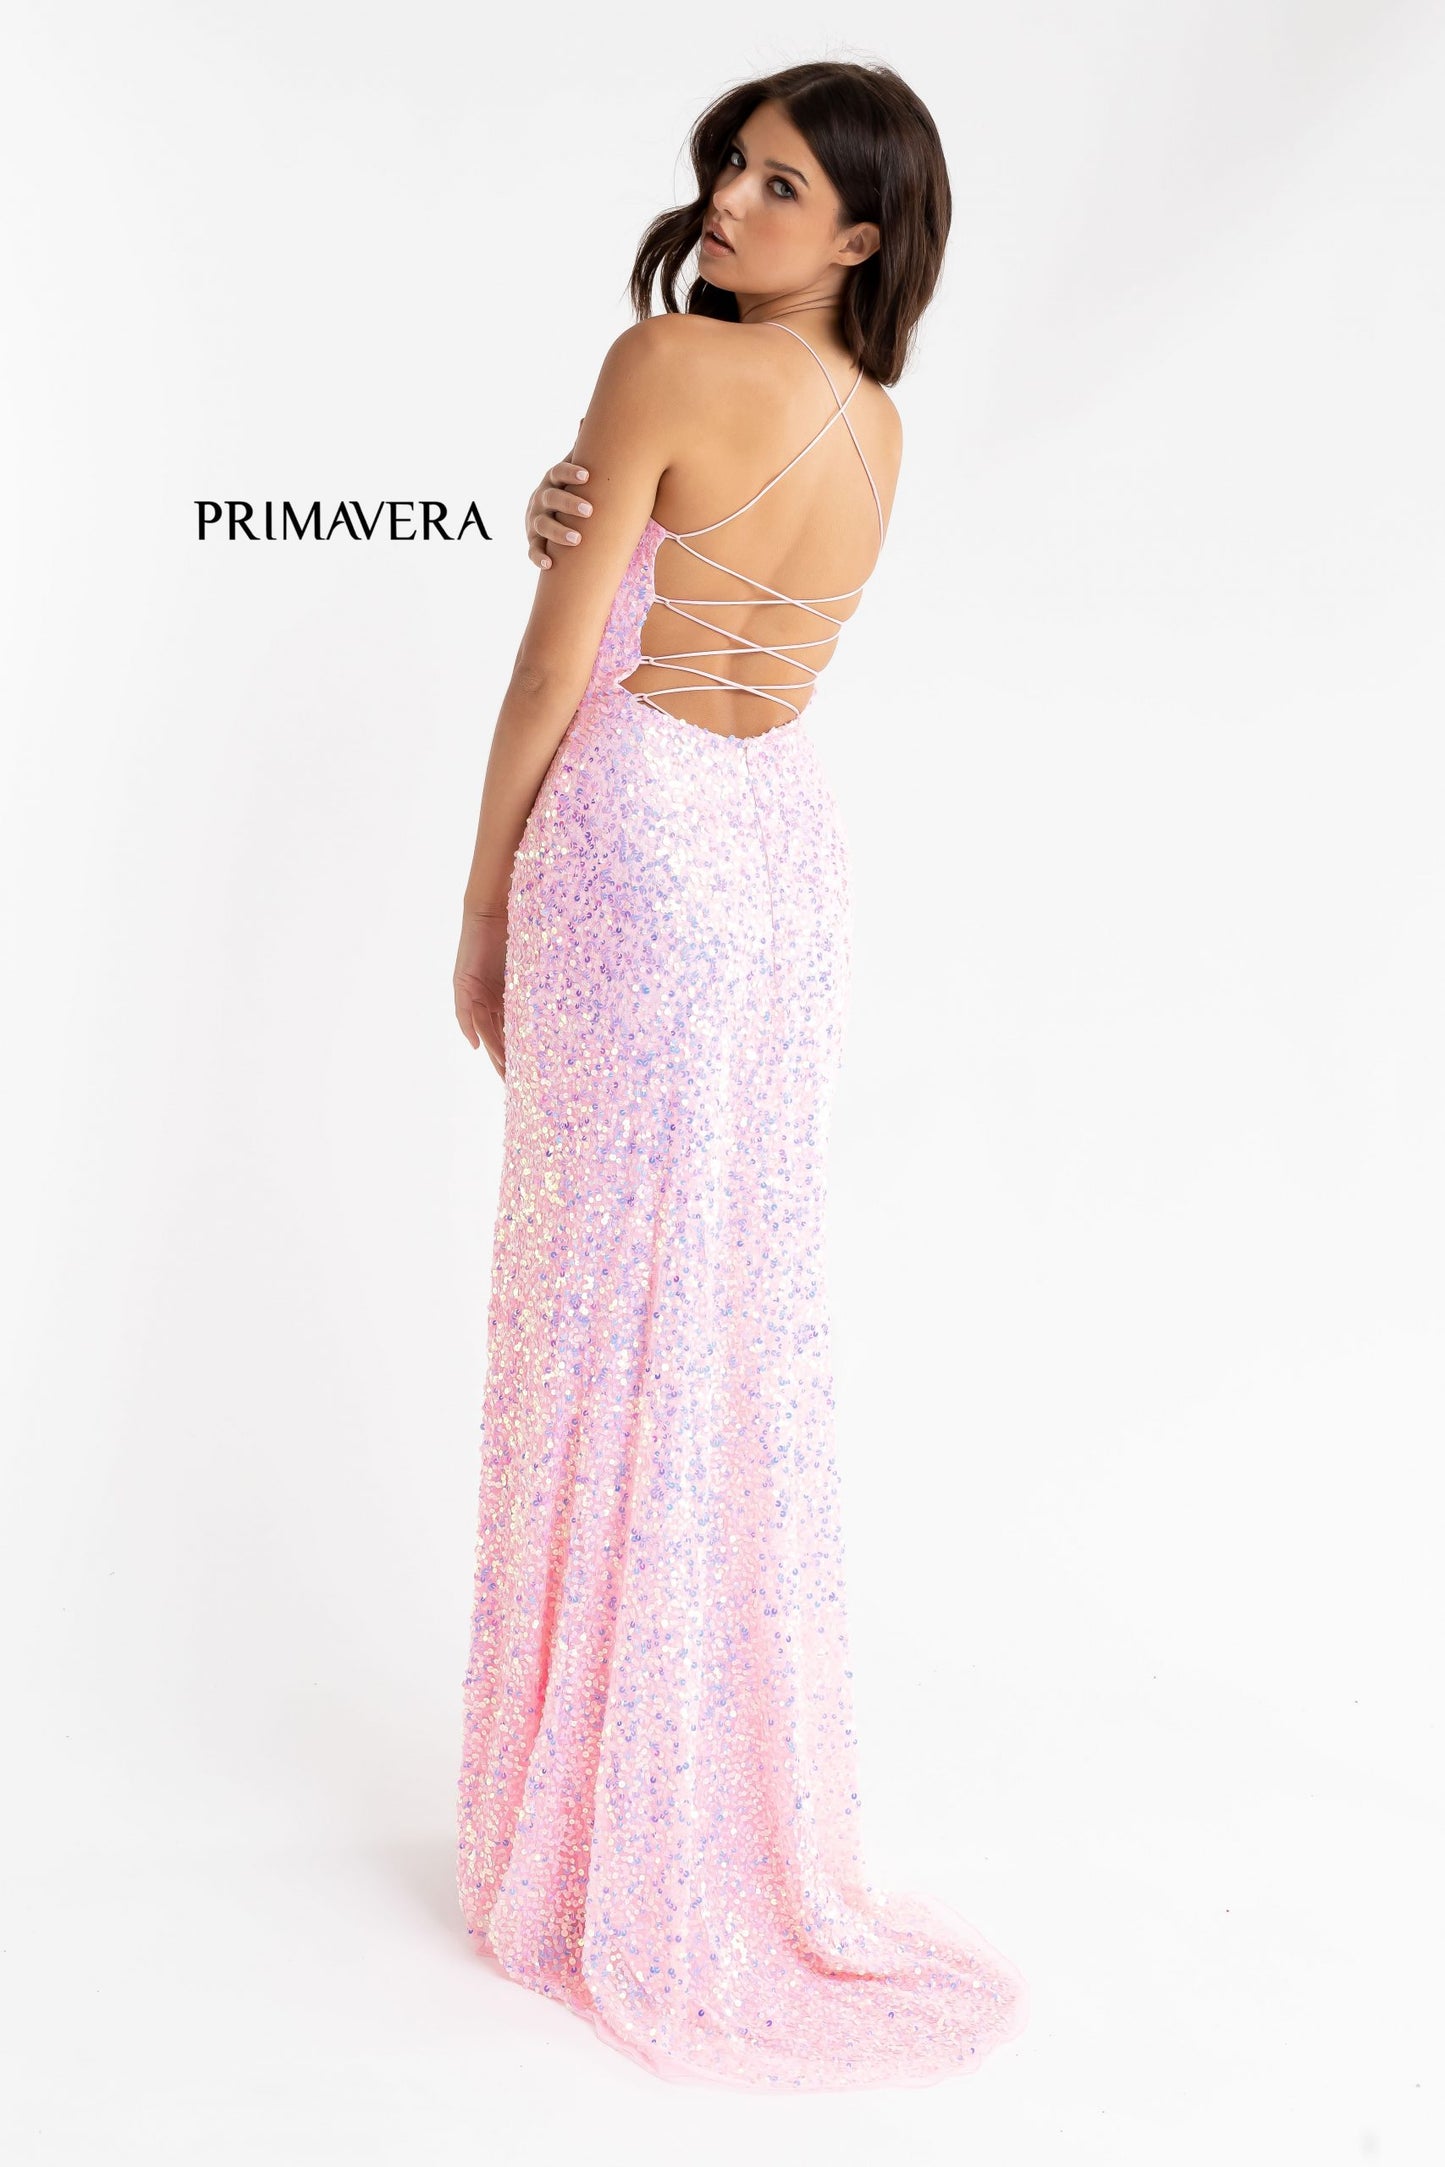 Primavera couture 3290 Size 2 Baby Pink Prom Dress Sequins Tie Back Side Slit Scoop Neckline